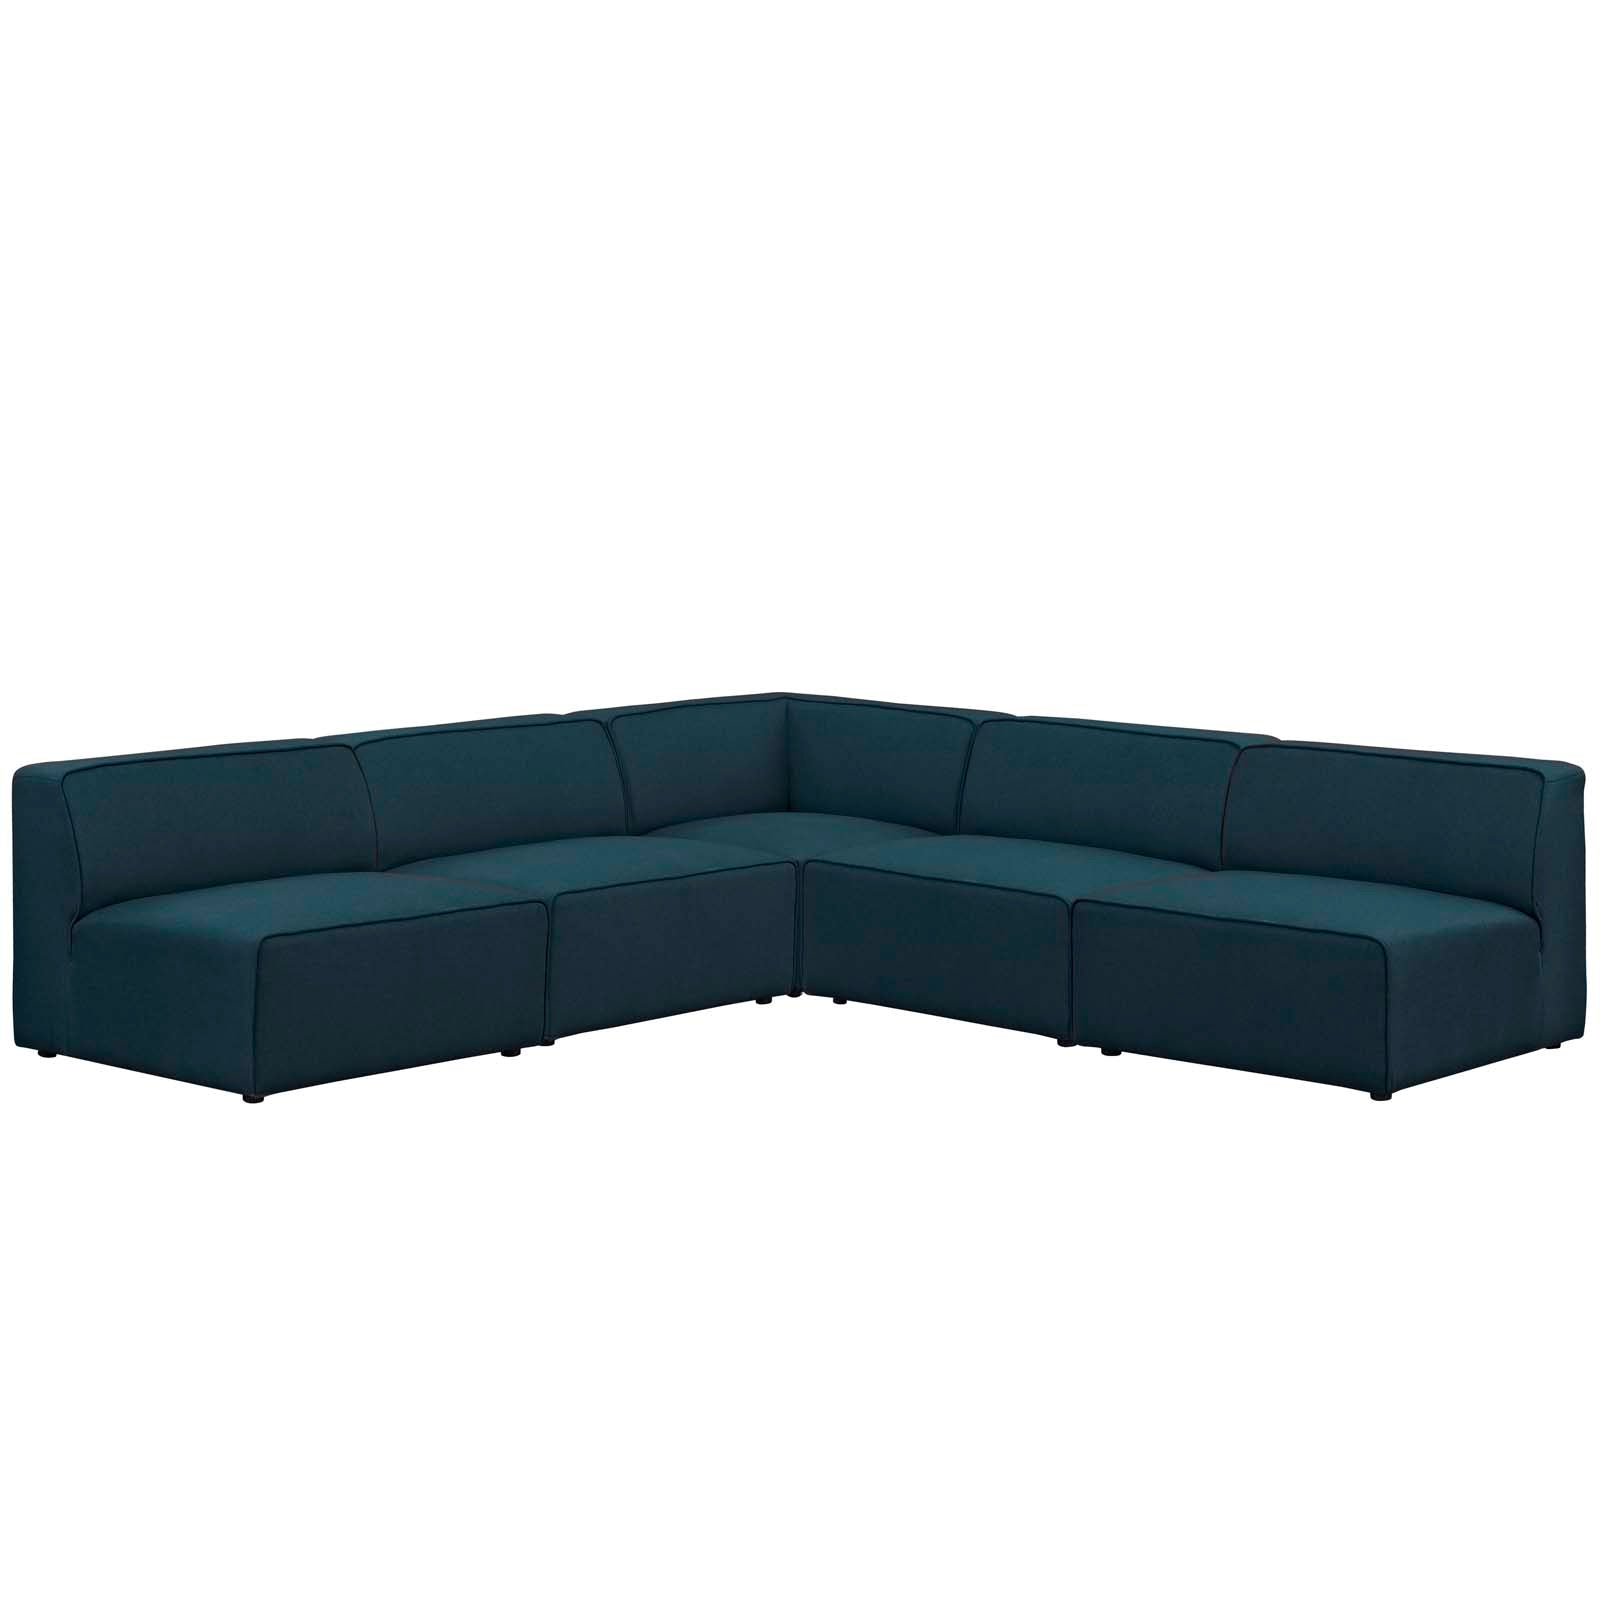 Mingle 5 Piece Upholstered Fabric Armless Sectional Sofa Set - East Shore Modern Home Furnishings